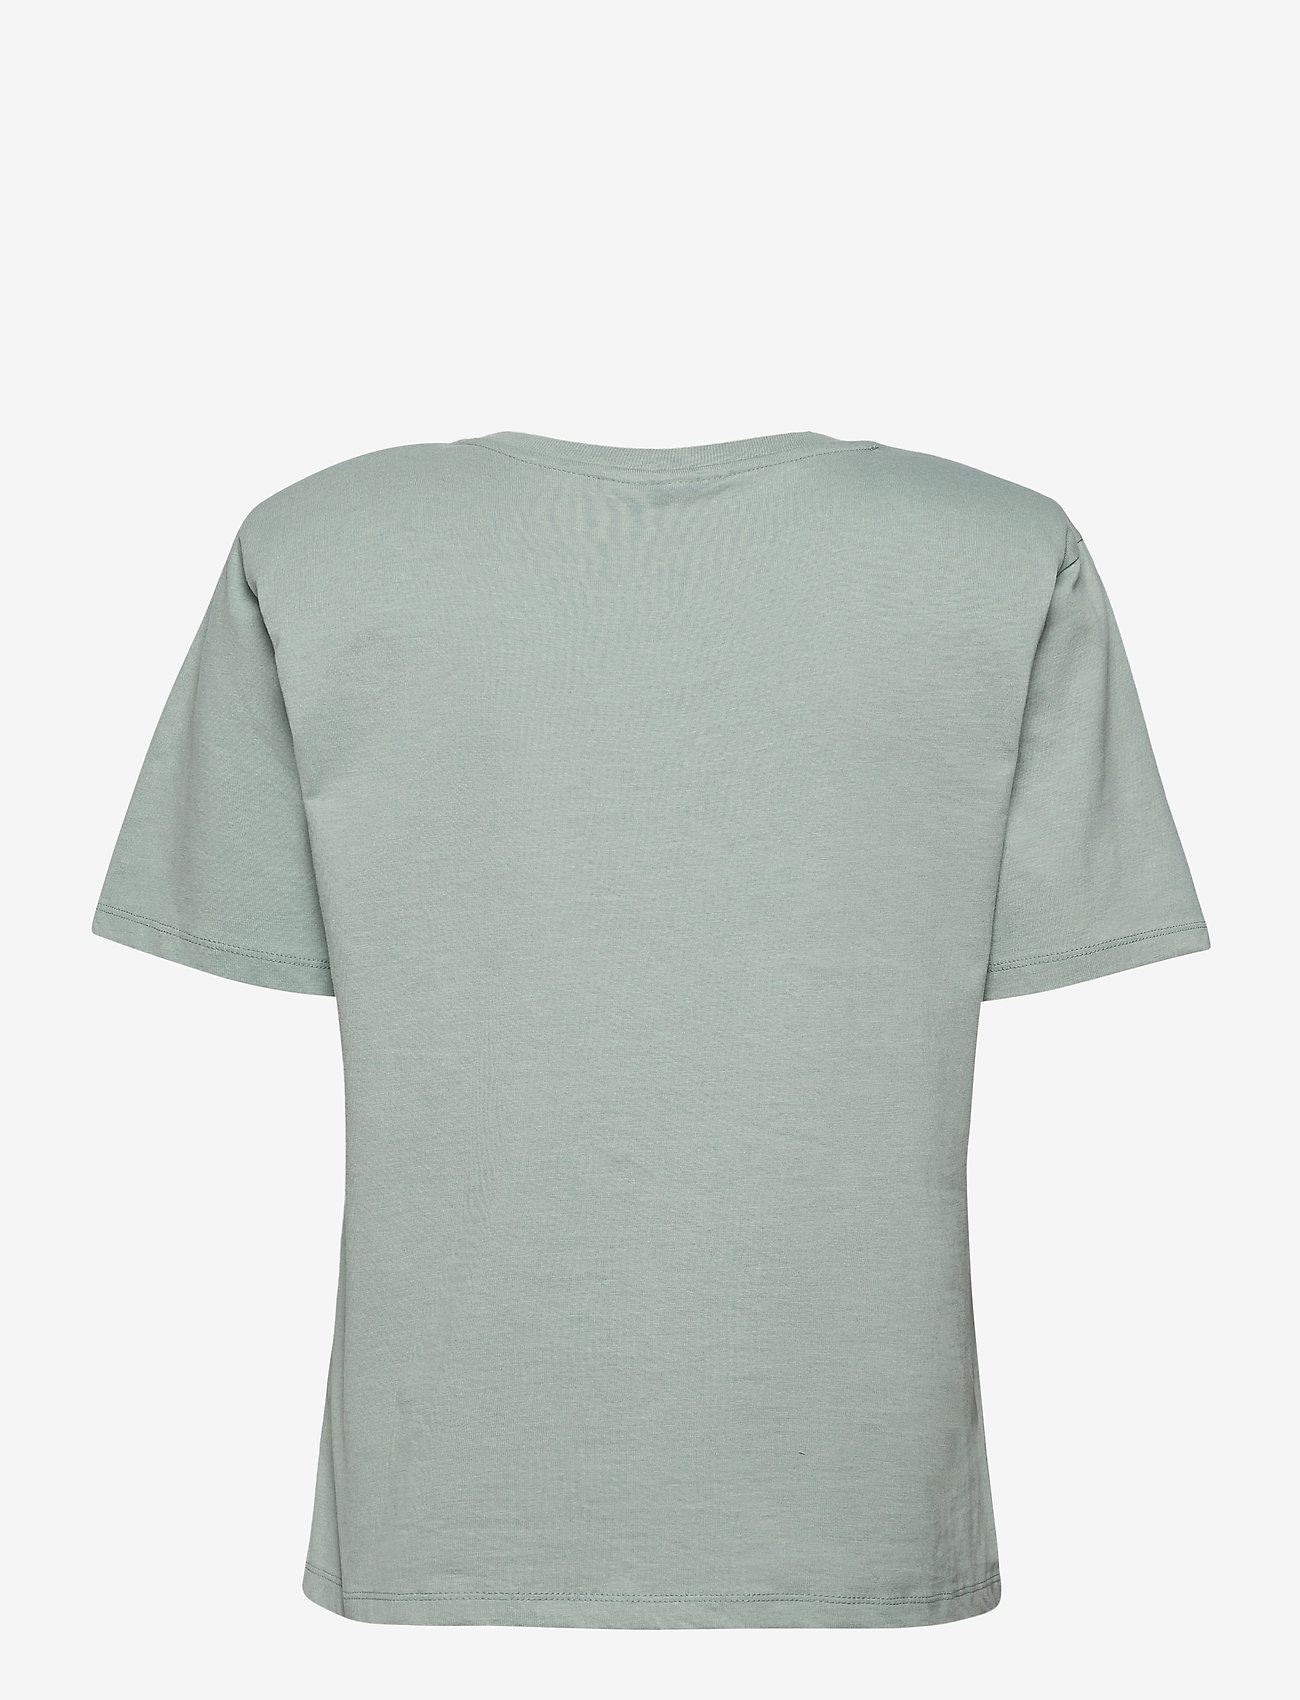 Gestuz - JoryGZ tee - marškinėliai - slate gray - 1